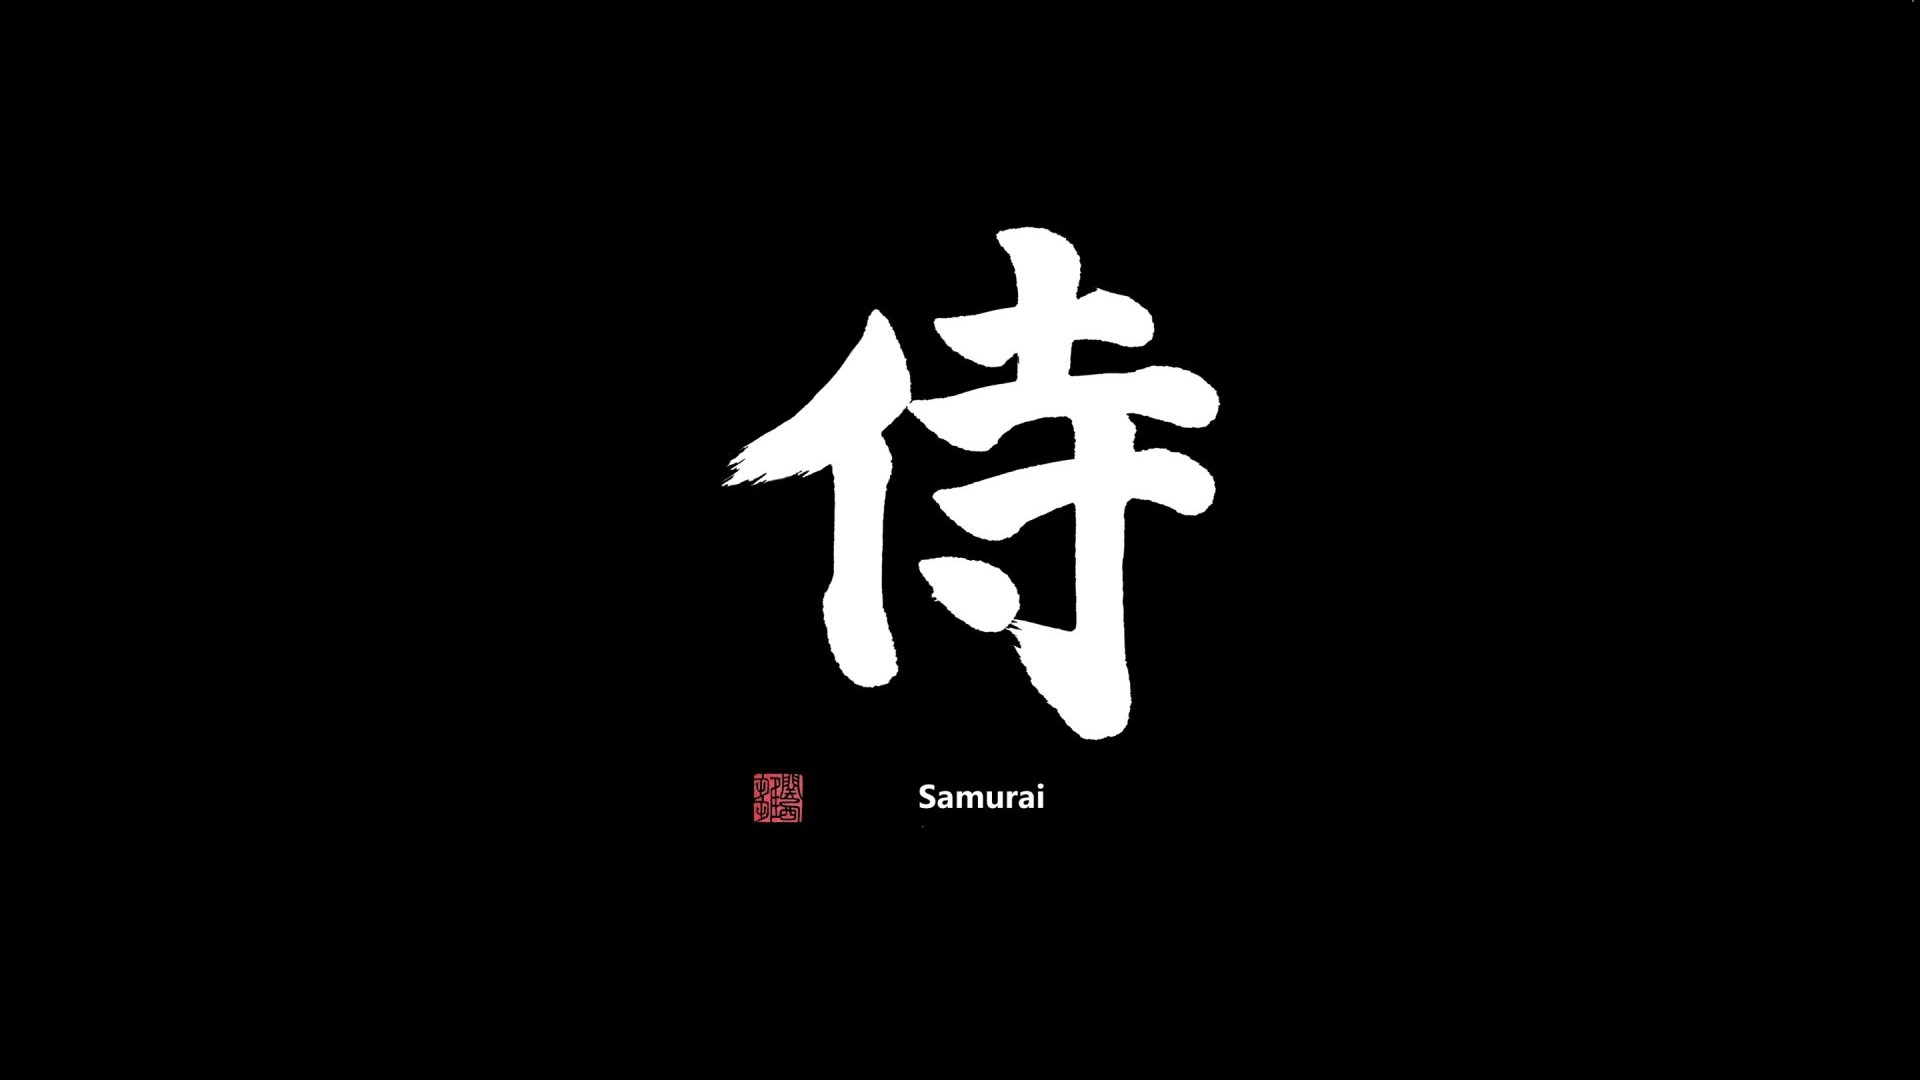 General 1920x1080 black minimalism Japan samurai Japanese Art calligraphy